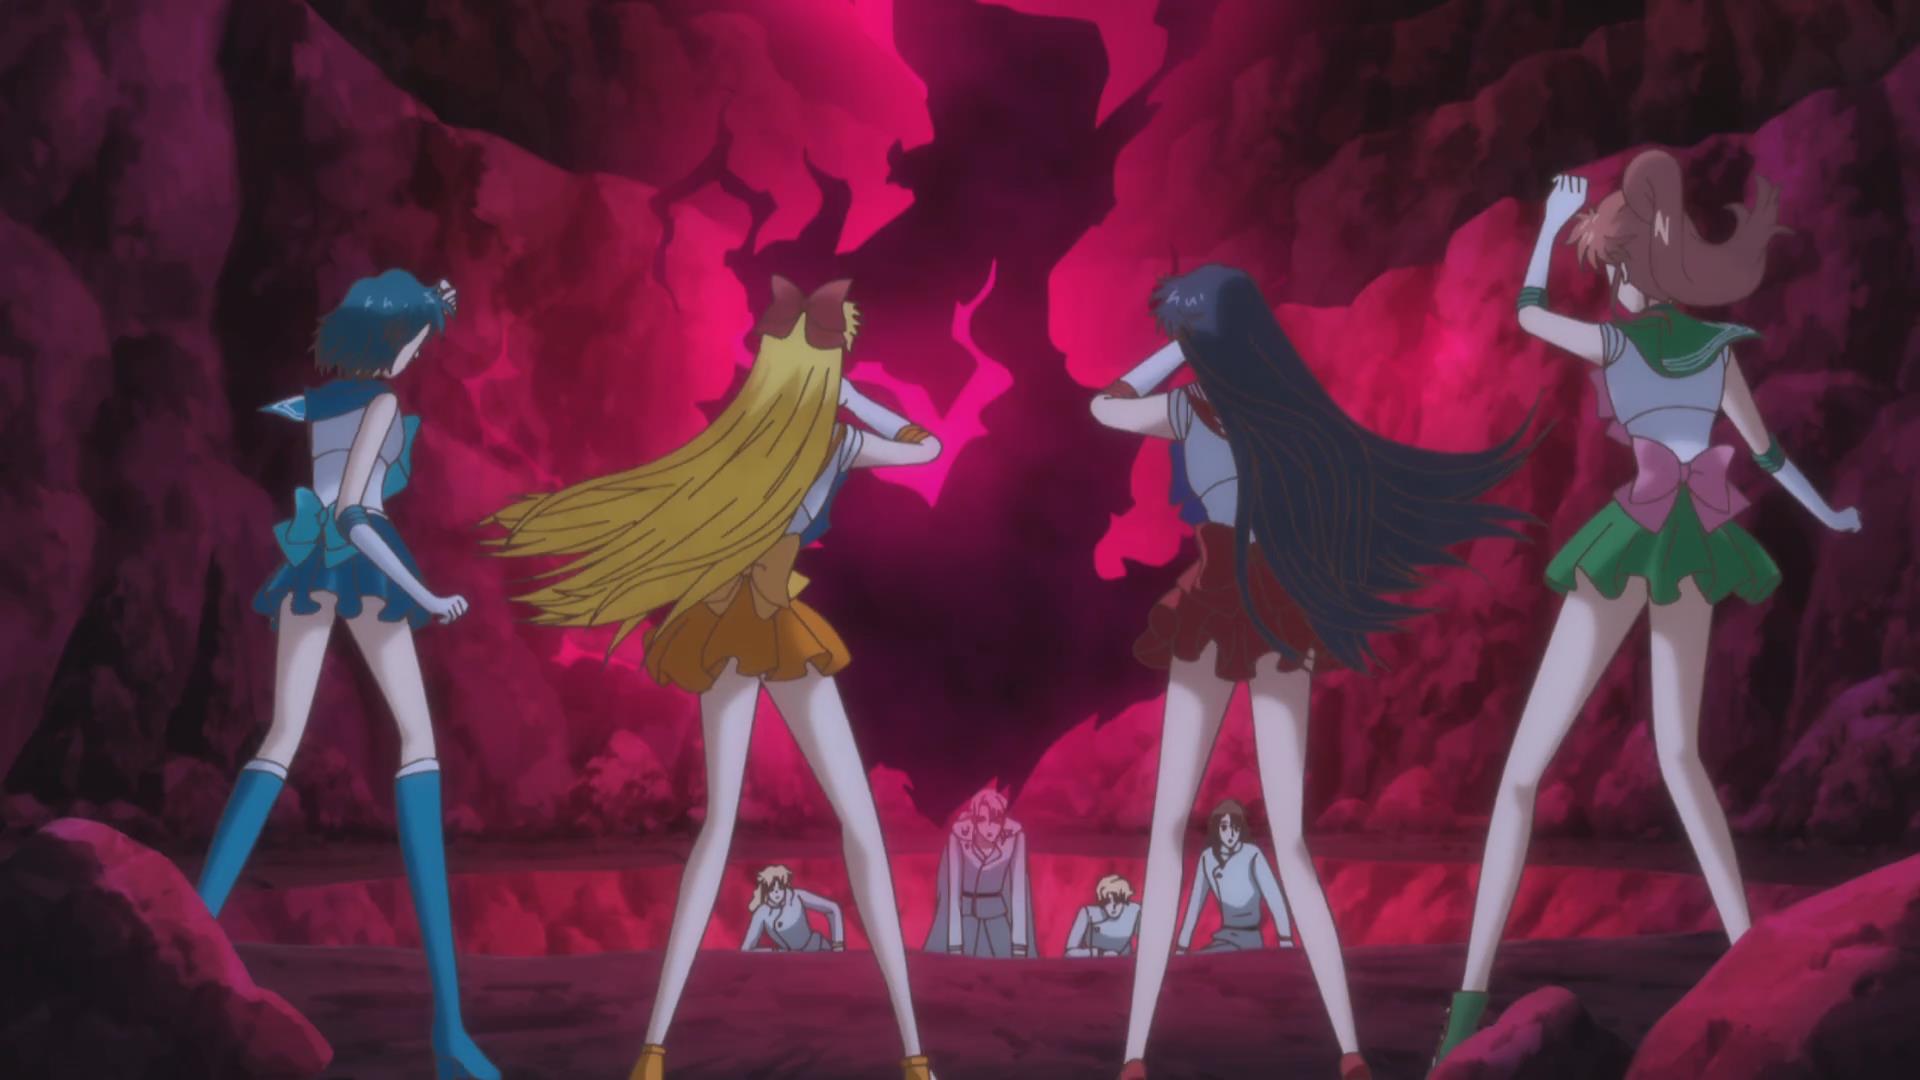 Sailor Moon Crystal: Mid-Season Review - Black Nerd Problems